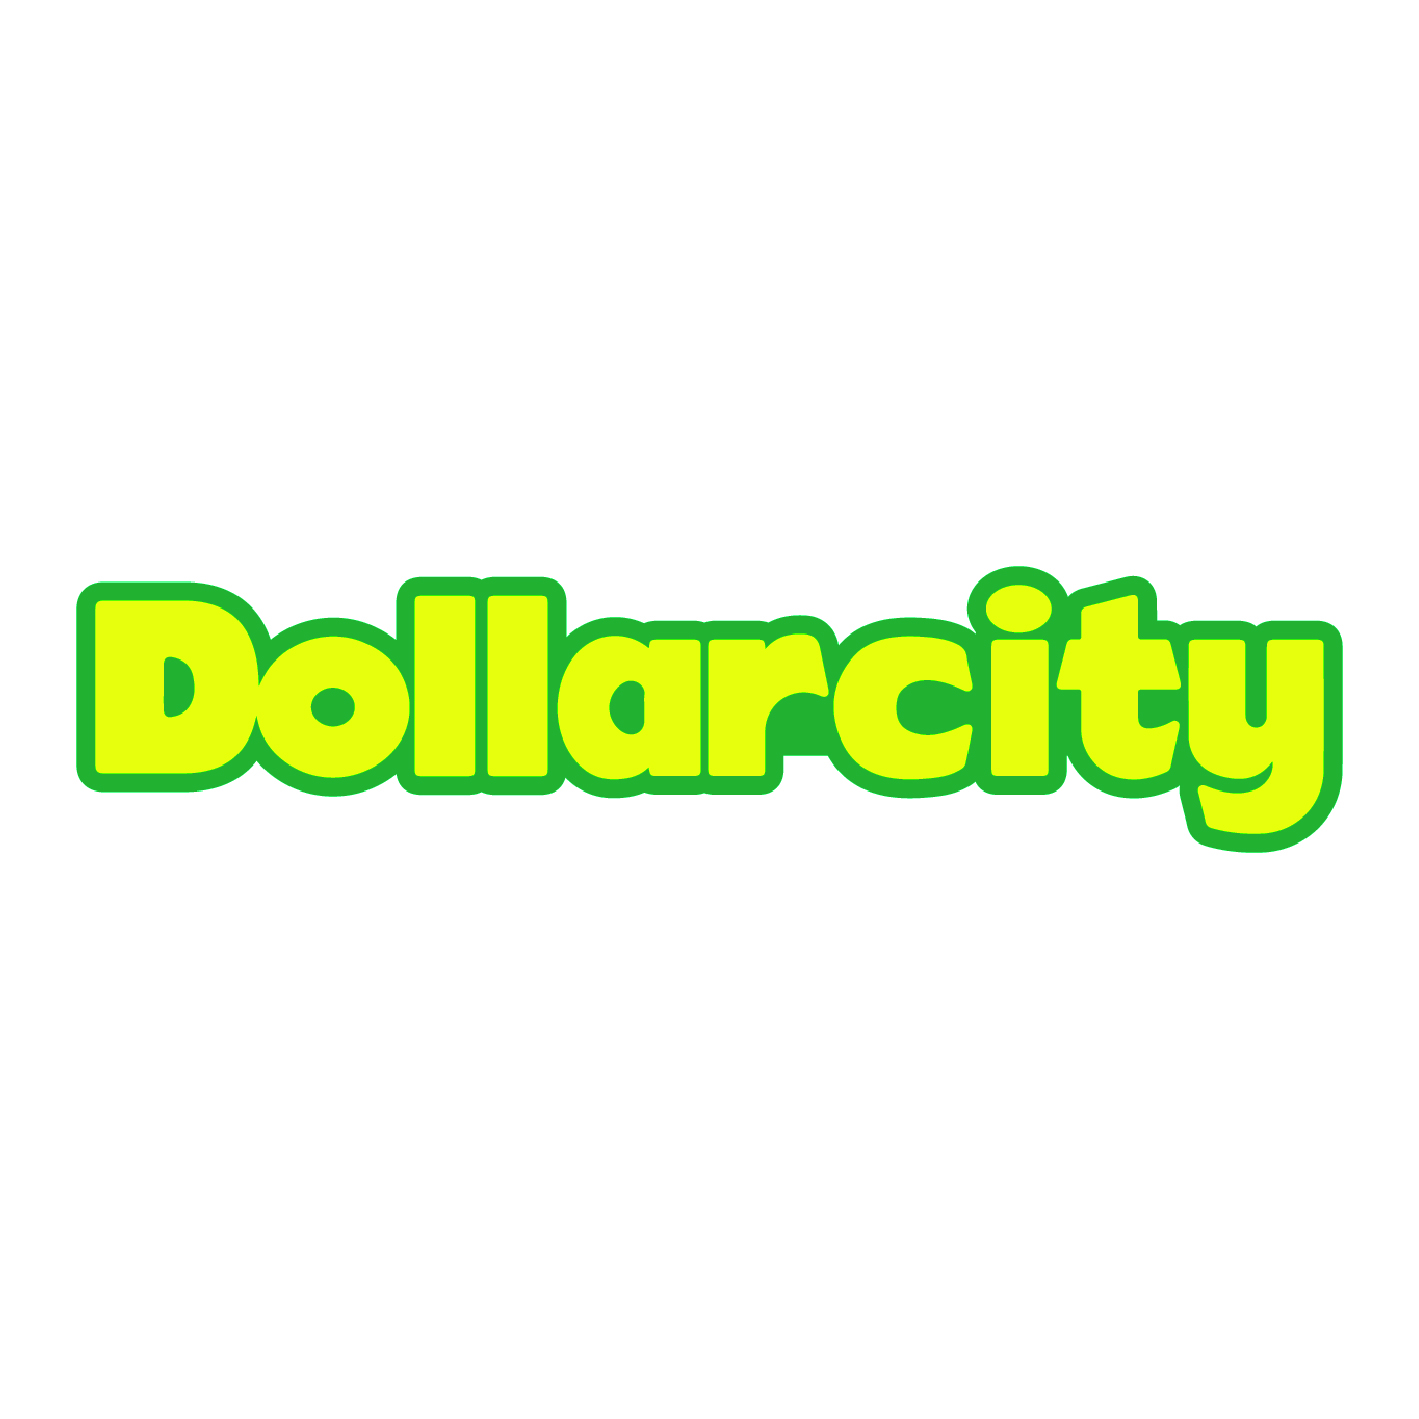 Dollarcity